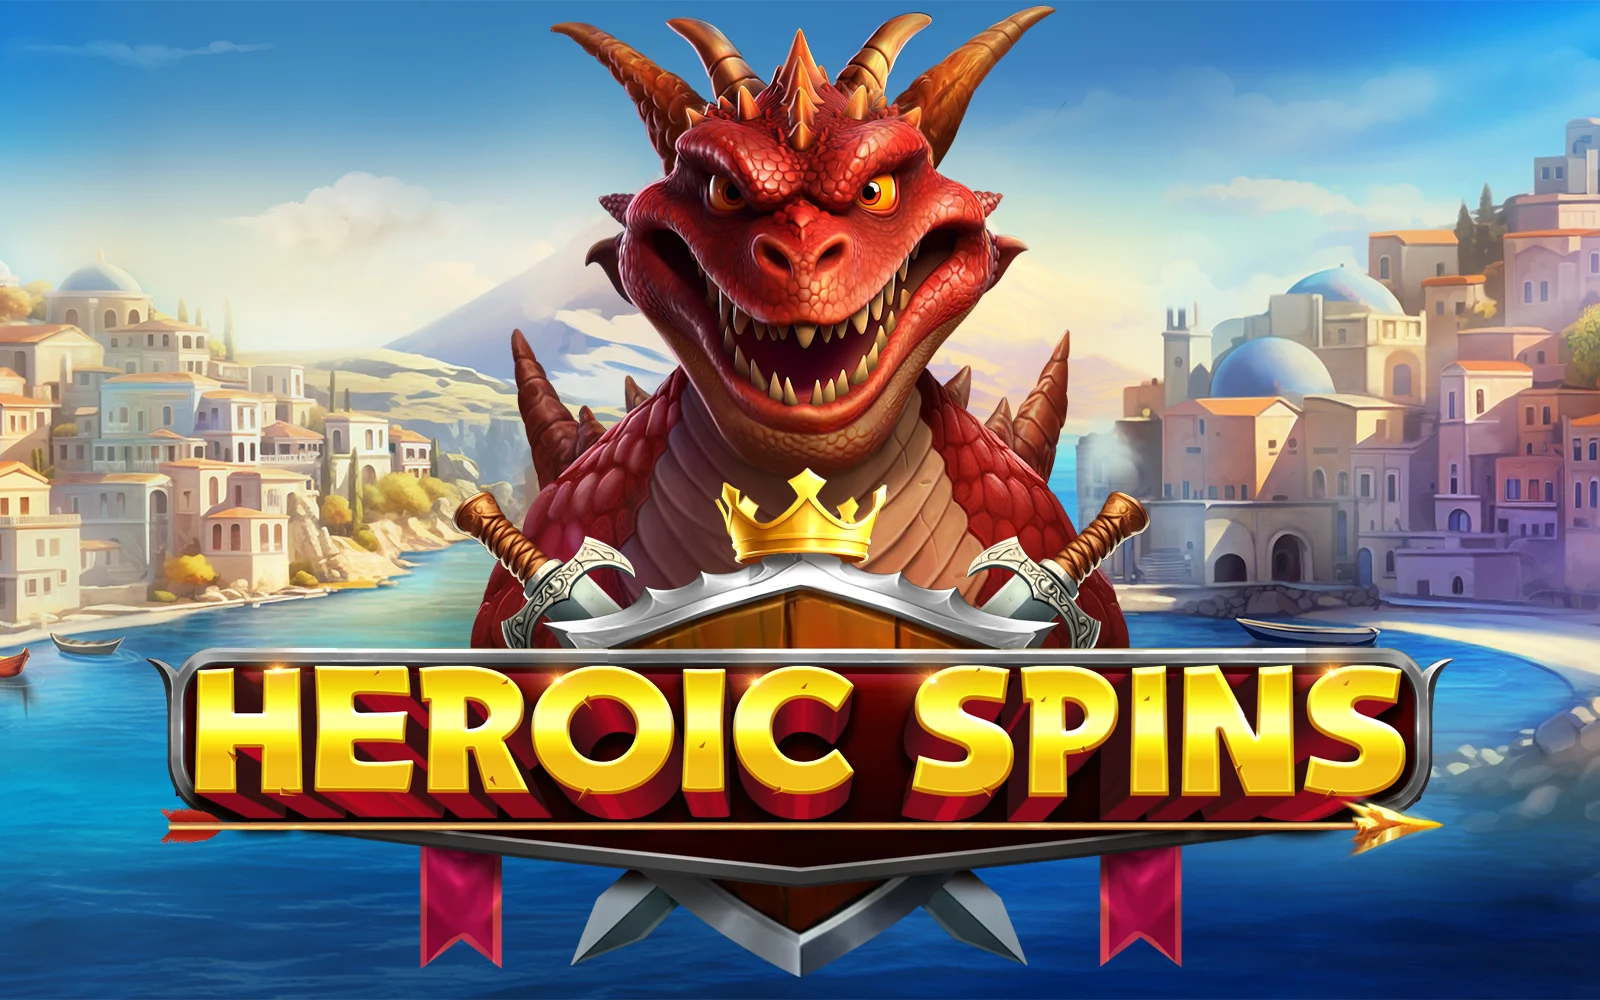 Play Heroic Spins on Starcasino.be online casino